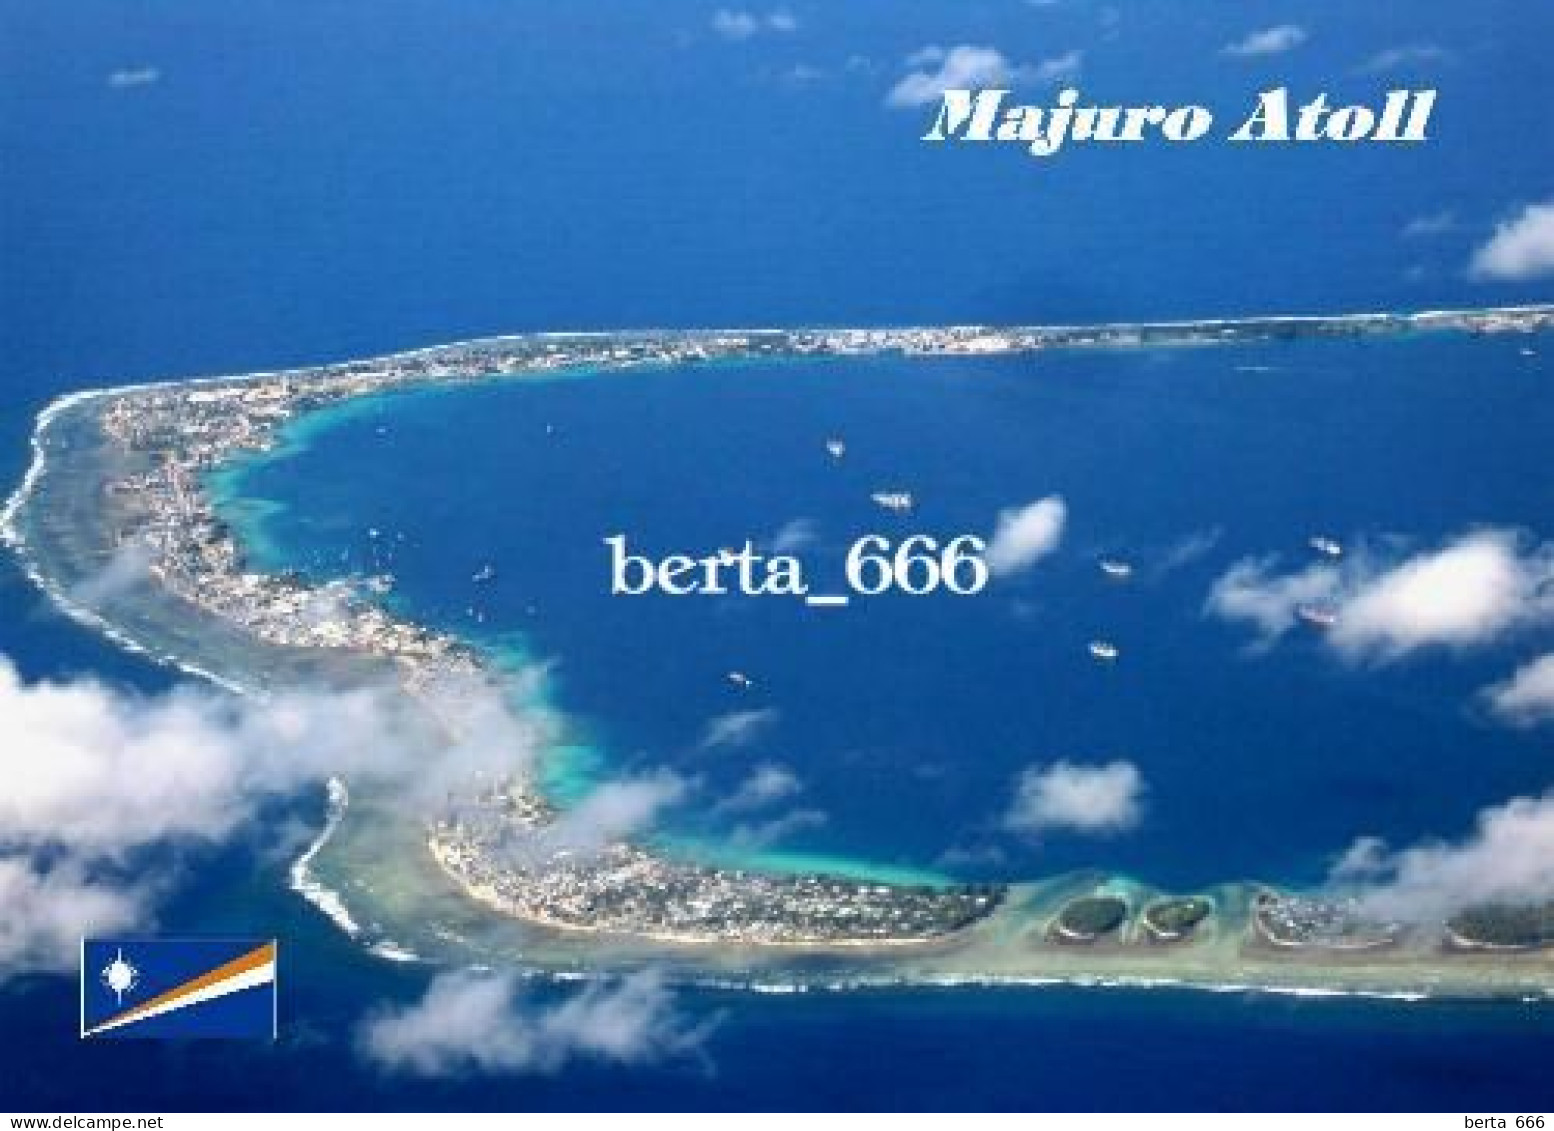 Marshall Islands Majuro Atoll Aerial View New Postcard - Marshall Islands